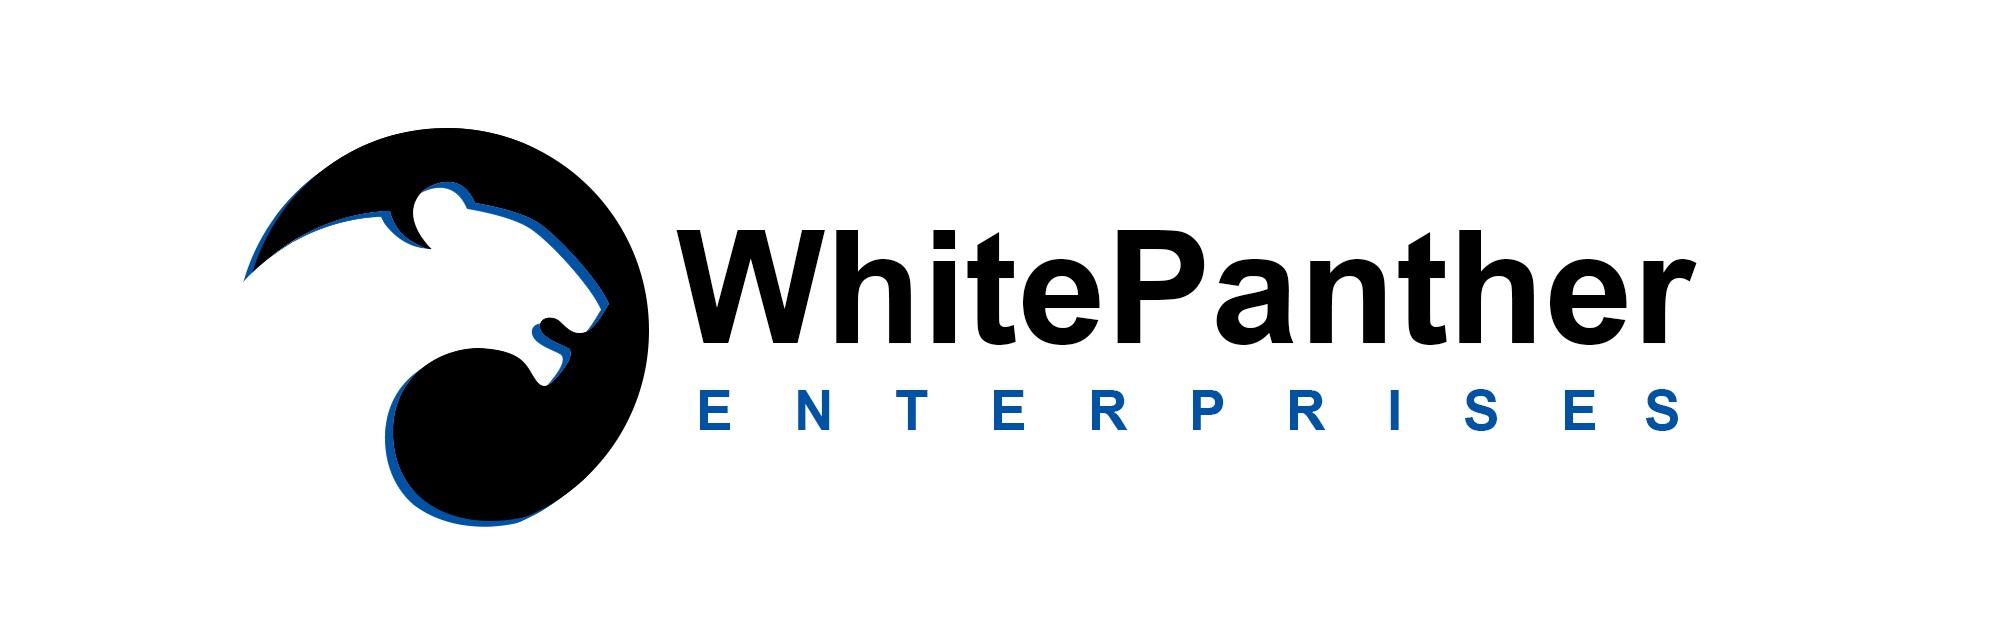 White Panther Logo - Digital Marketing Agency in Delhi, India. SEO, SMM, PPC